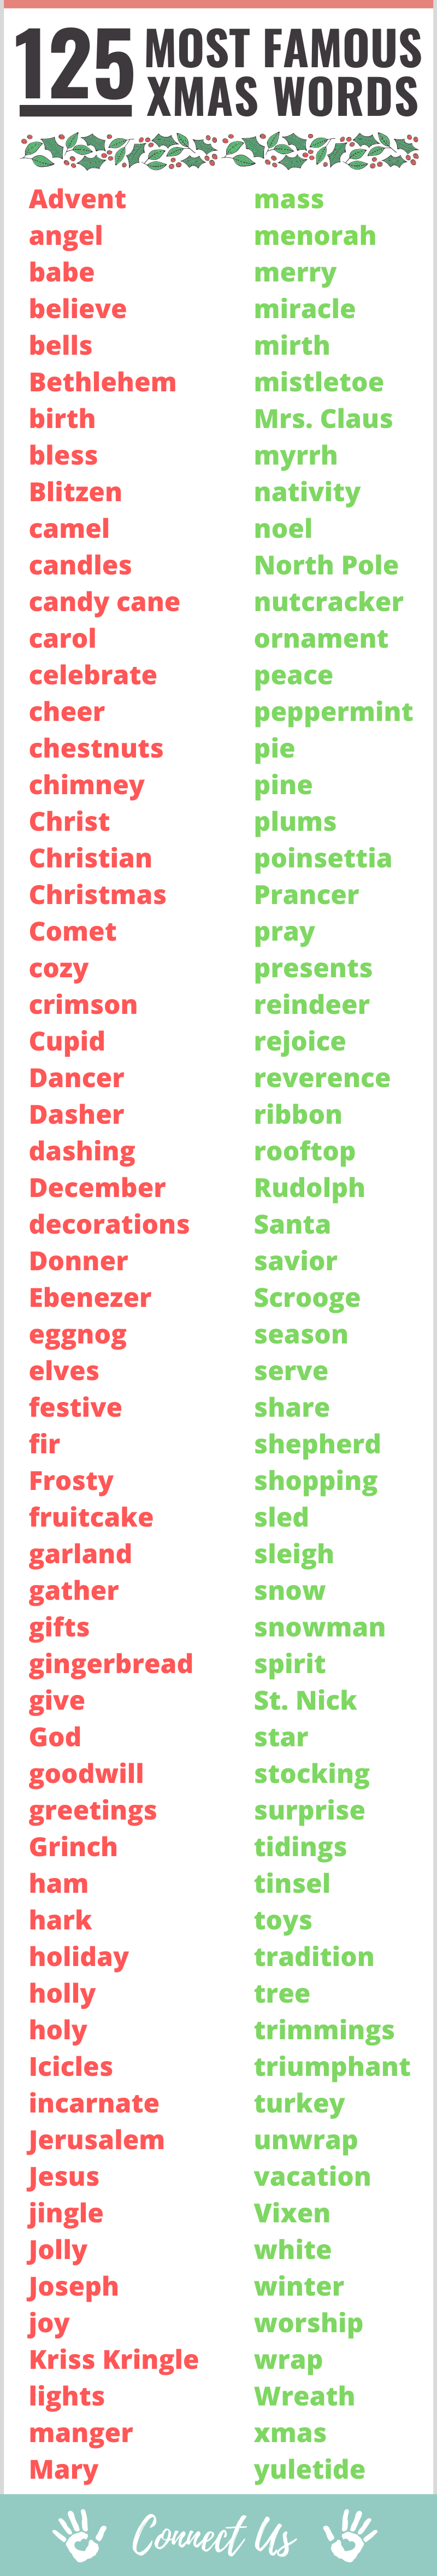 Christmas-Words-List-Infographic